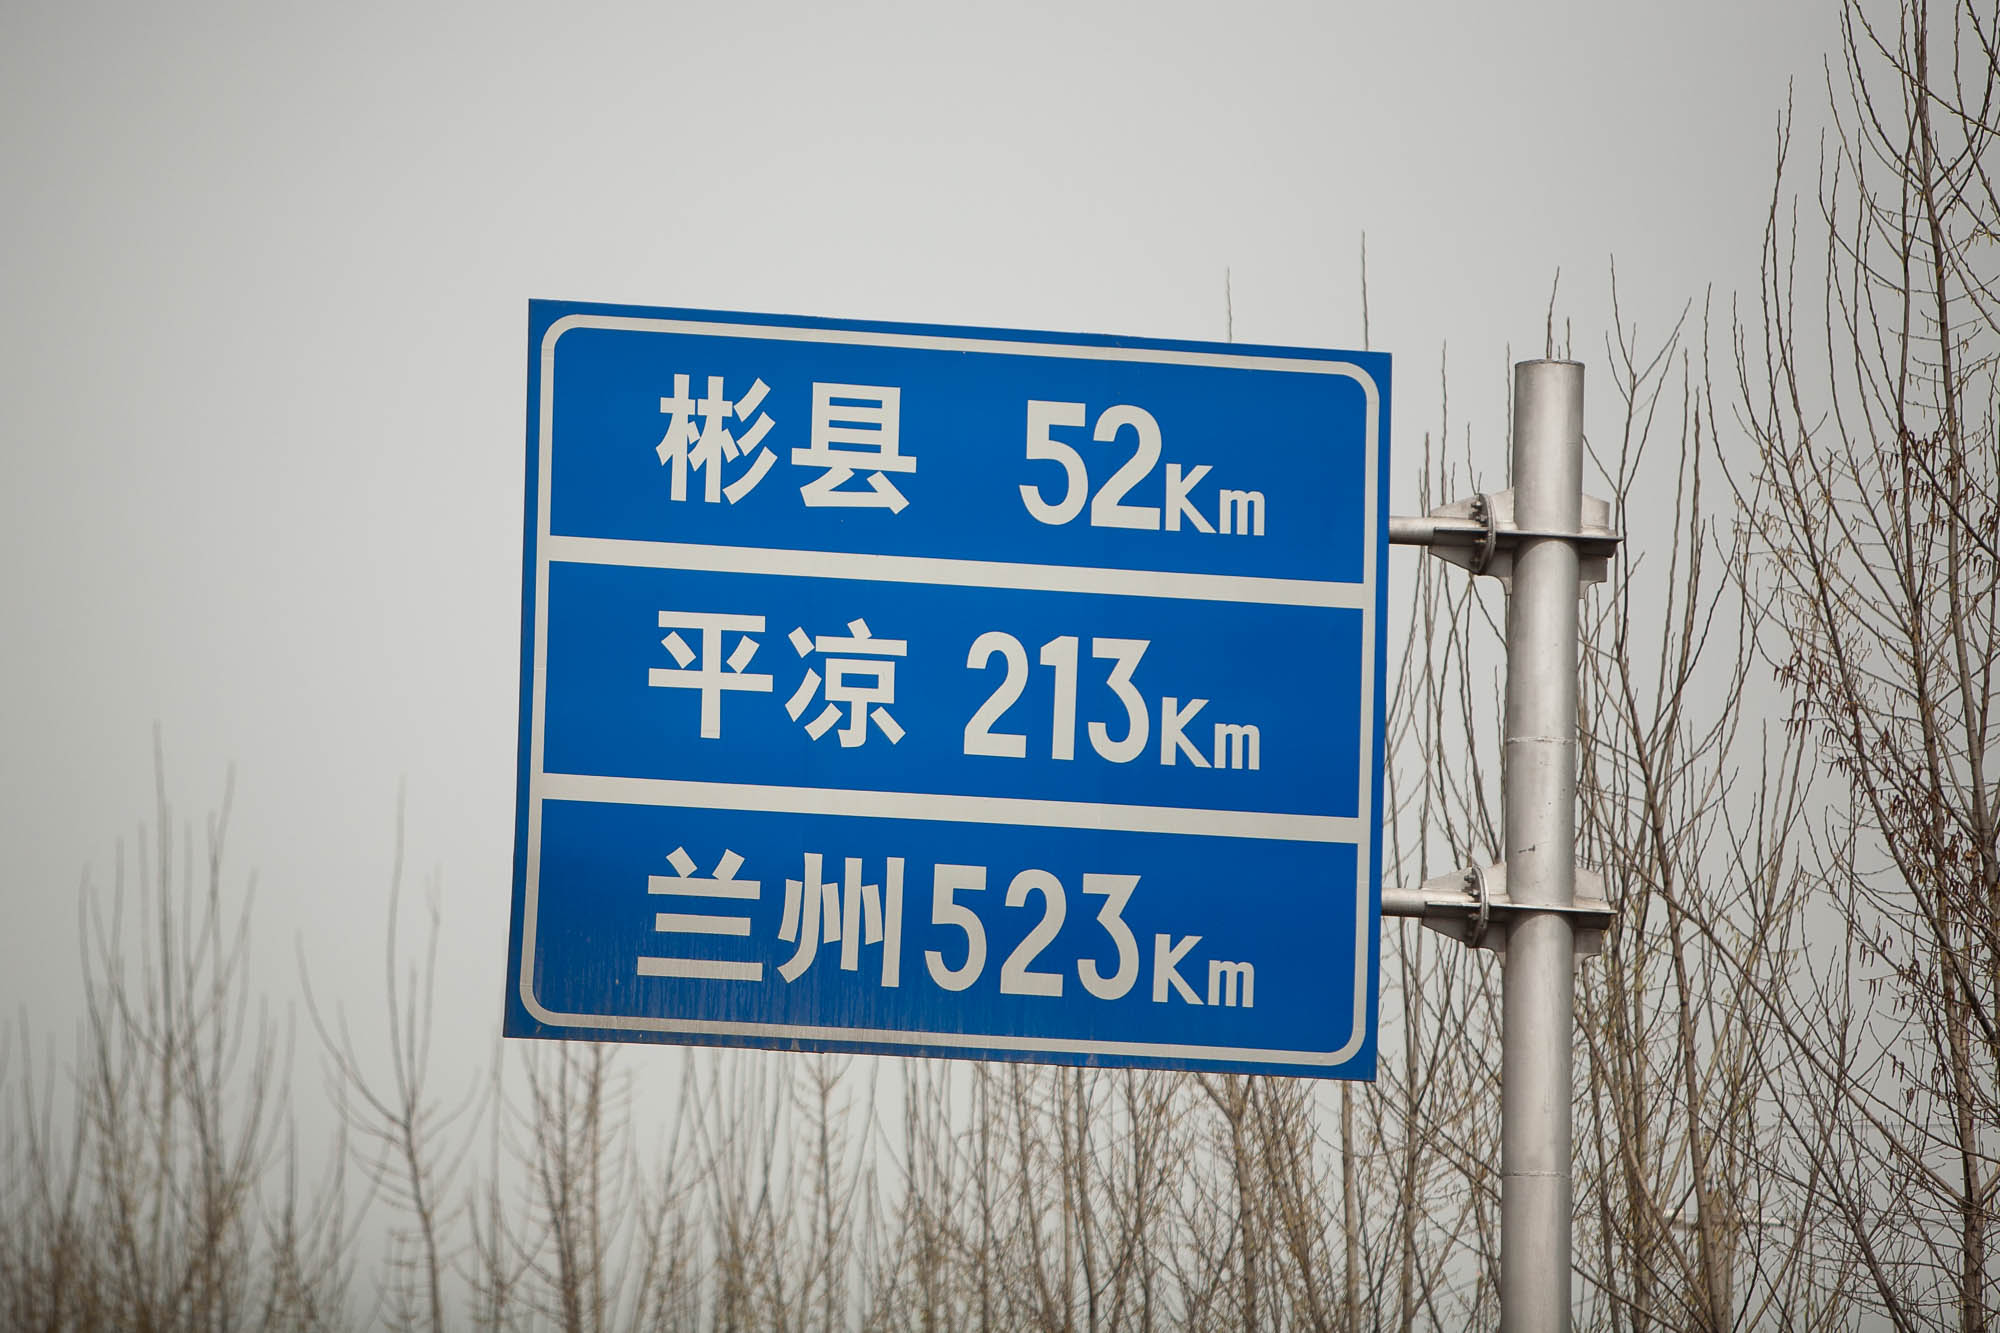 Binxian 52km